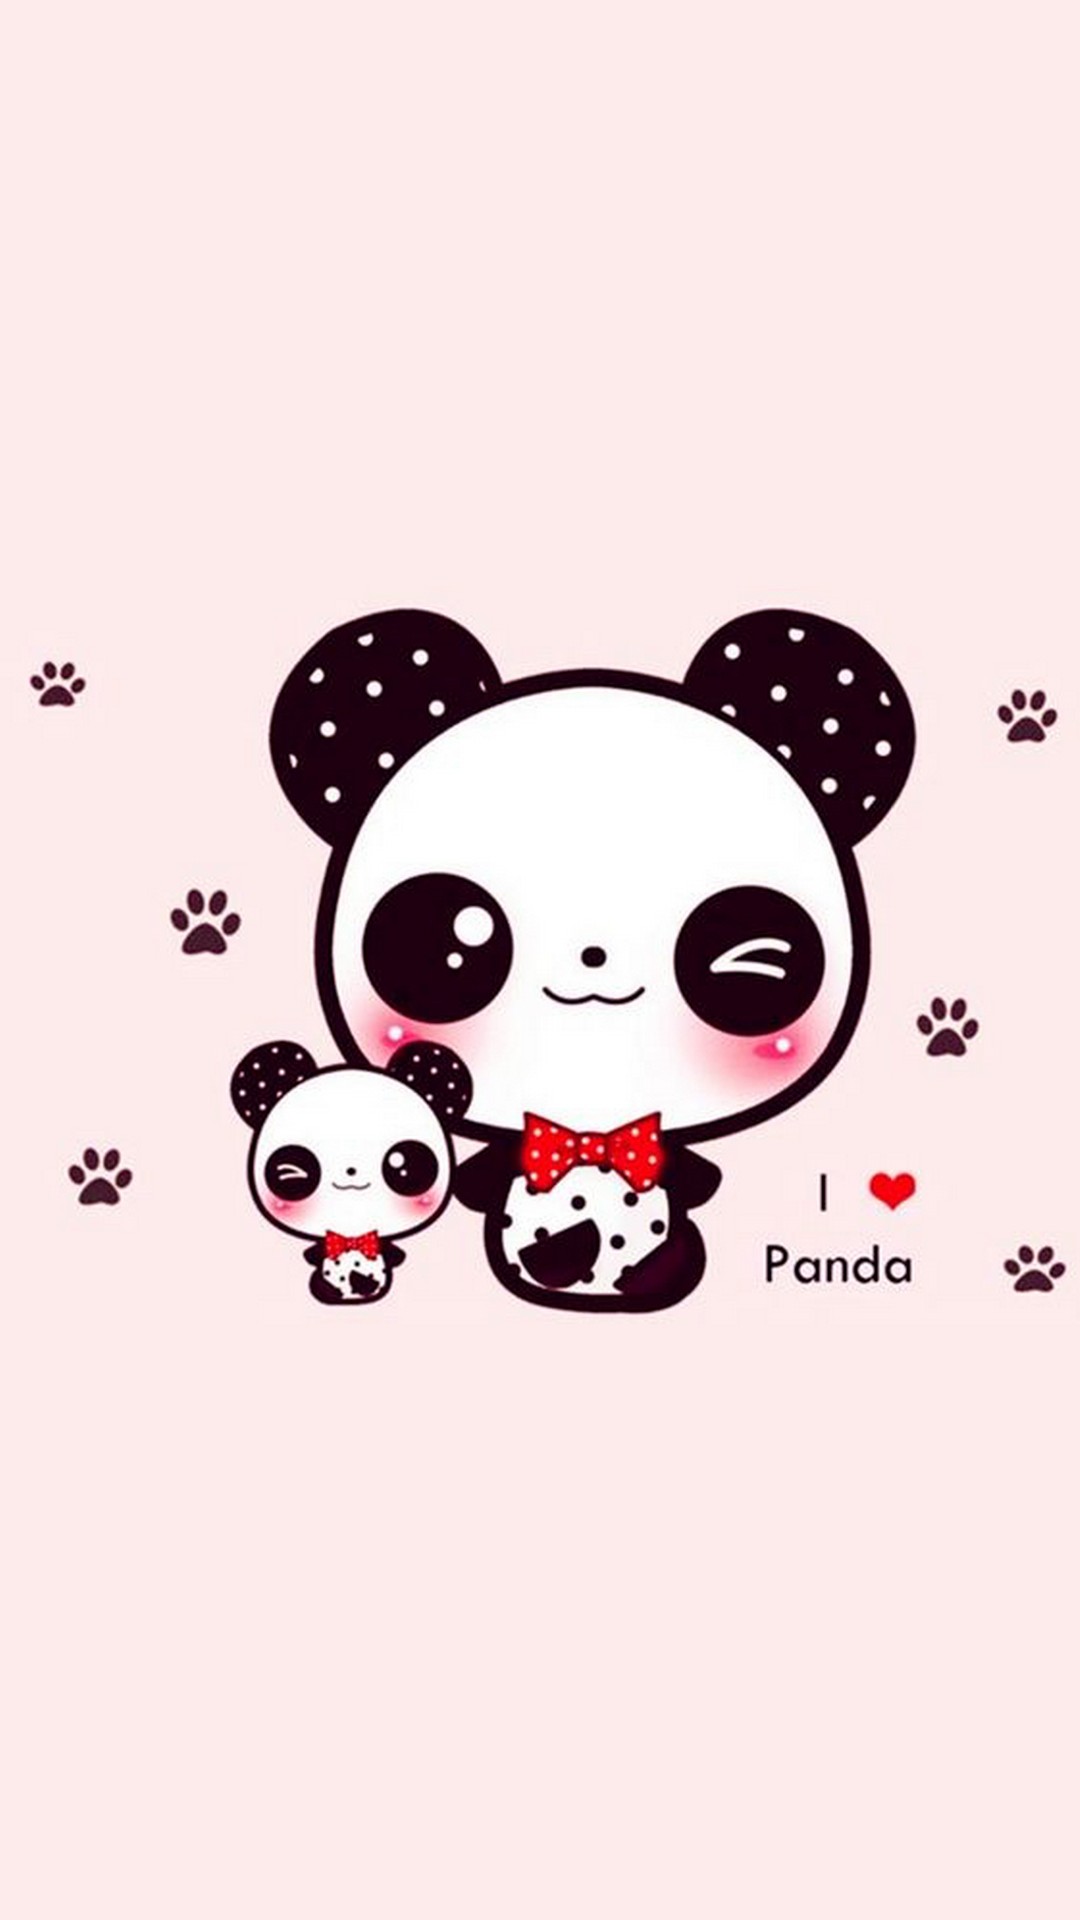 Cute Panda Wallpaper For iPhone resolution 1080x1920